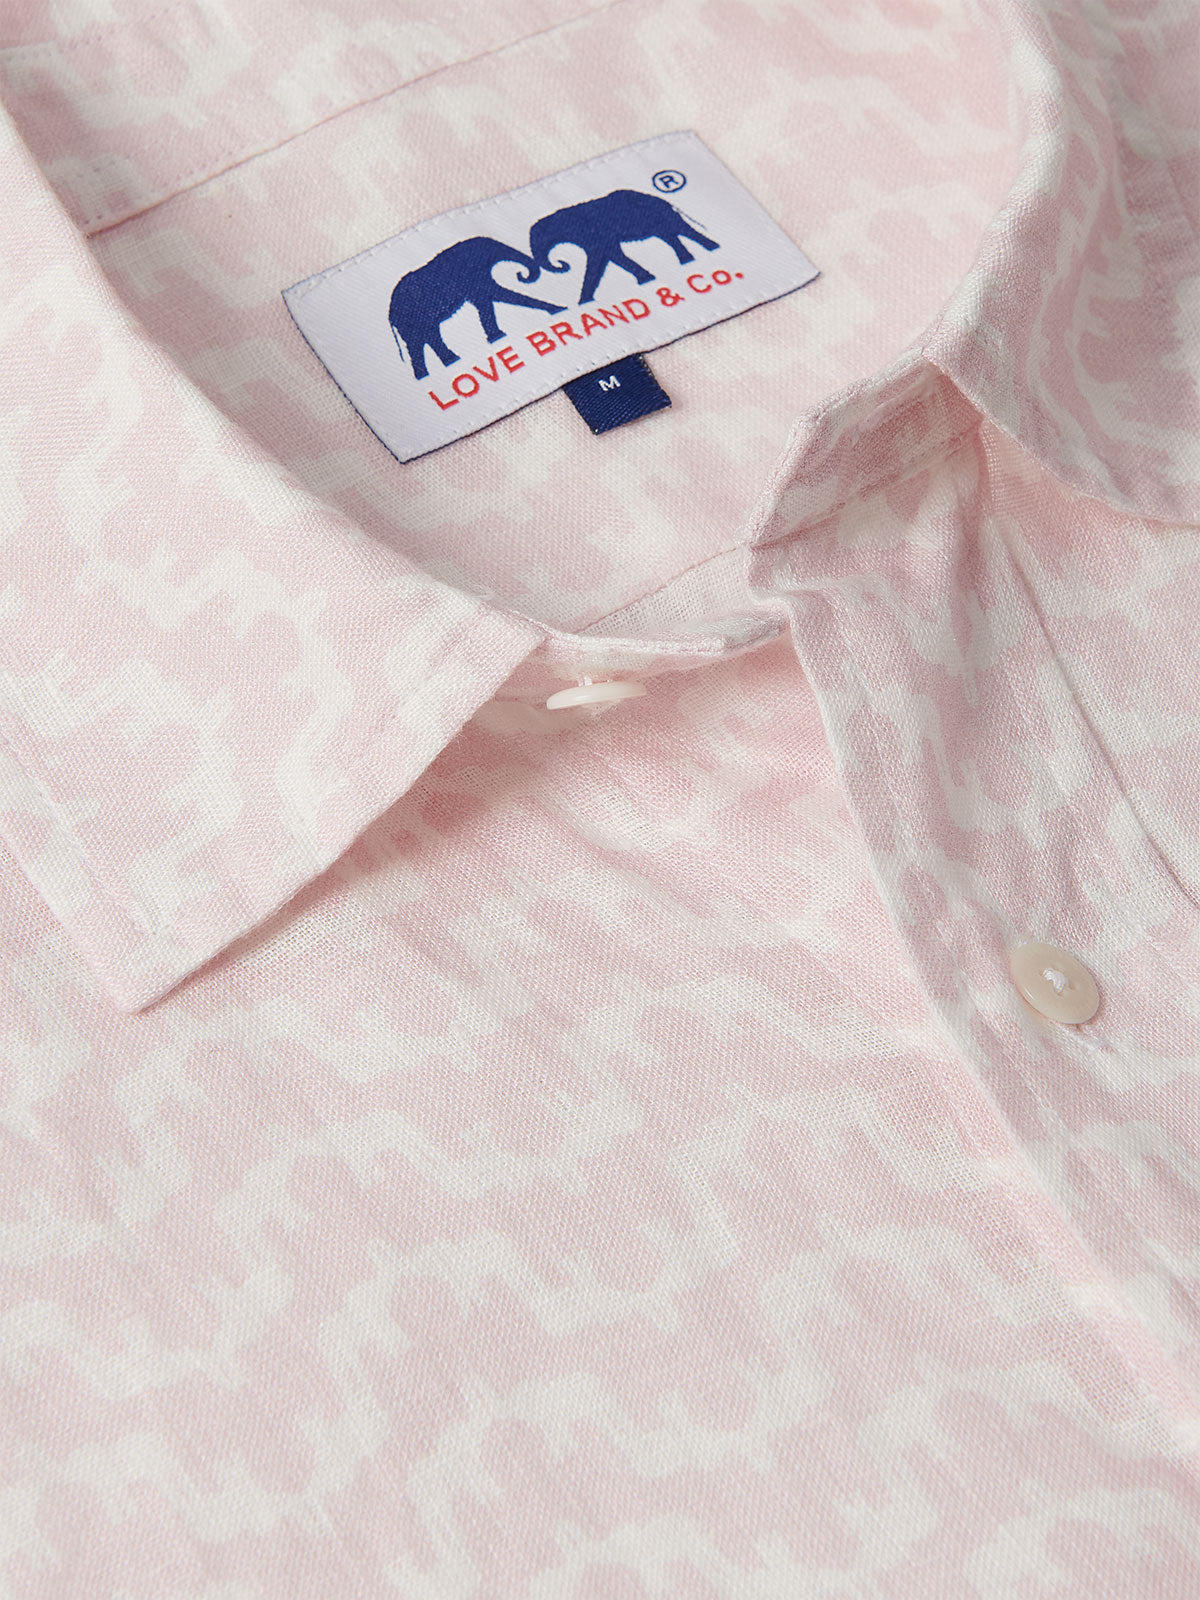 Elephant Palace Pink Abaco mens linen shirt collar